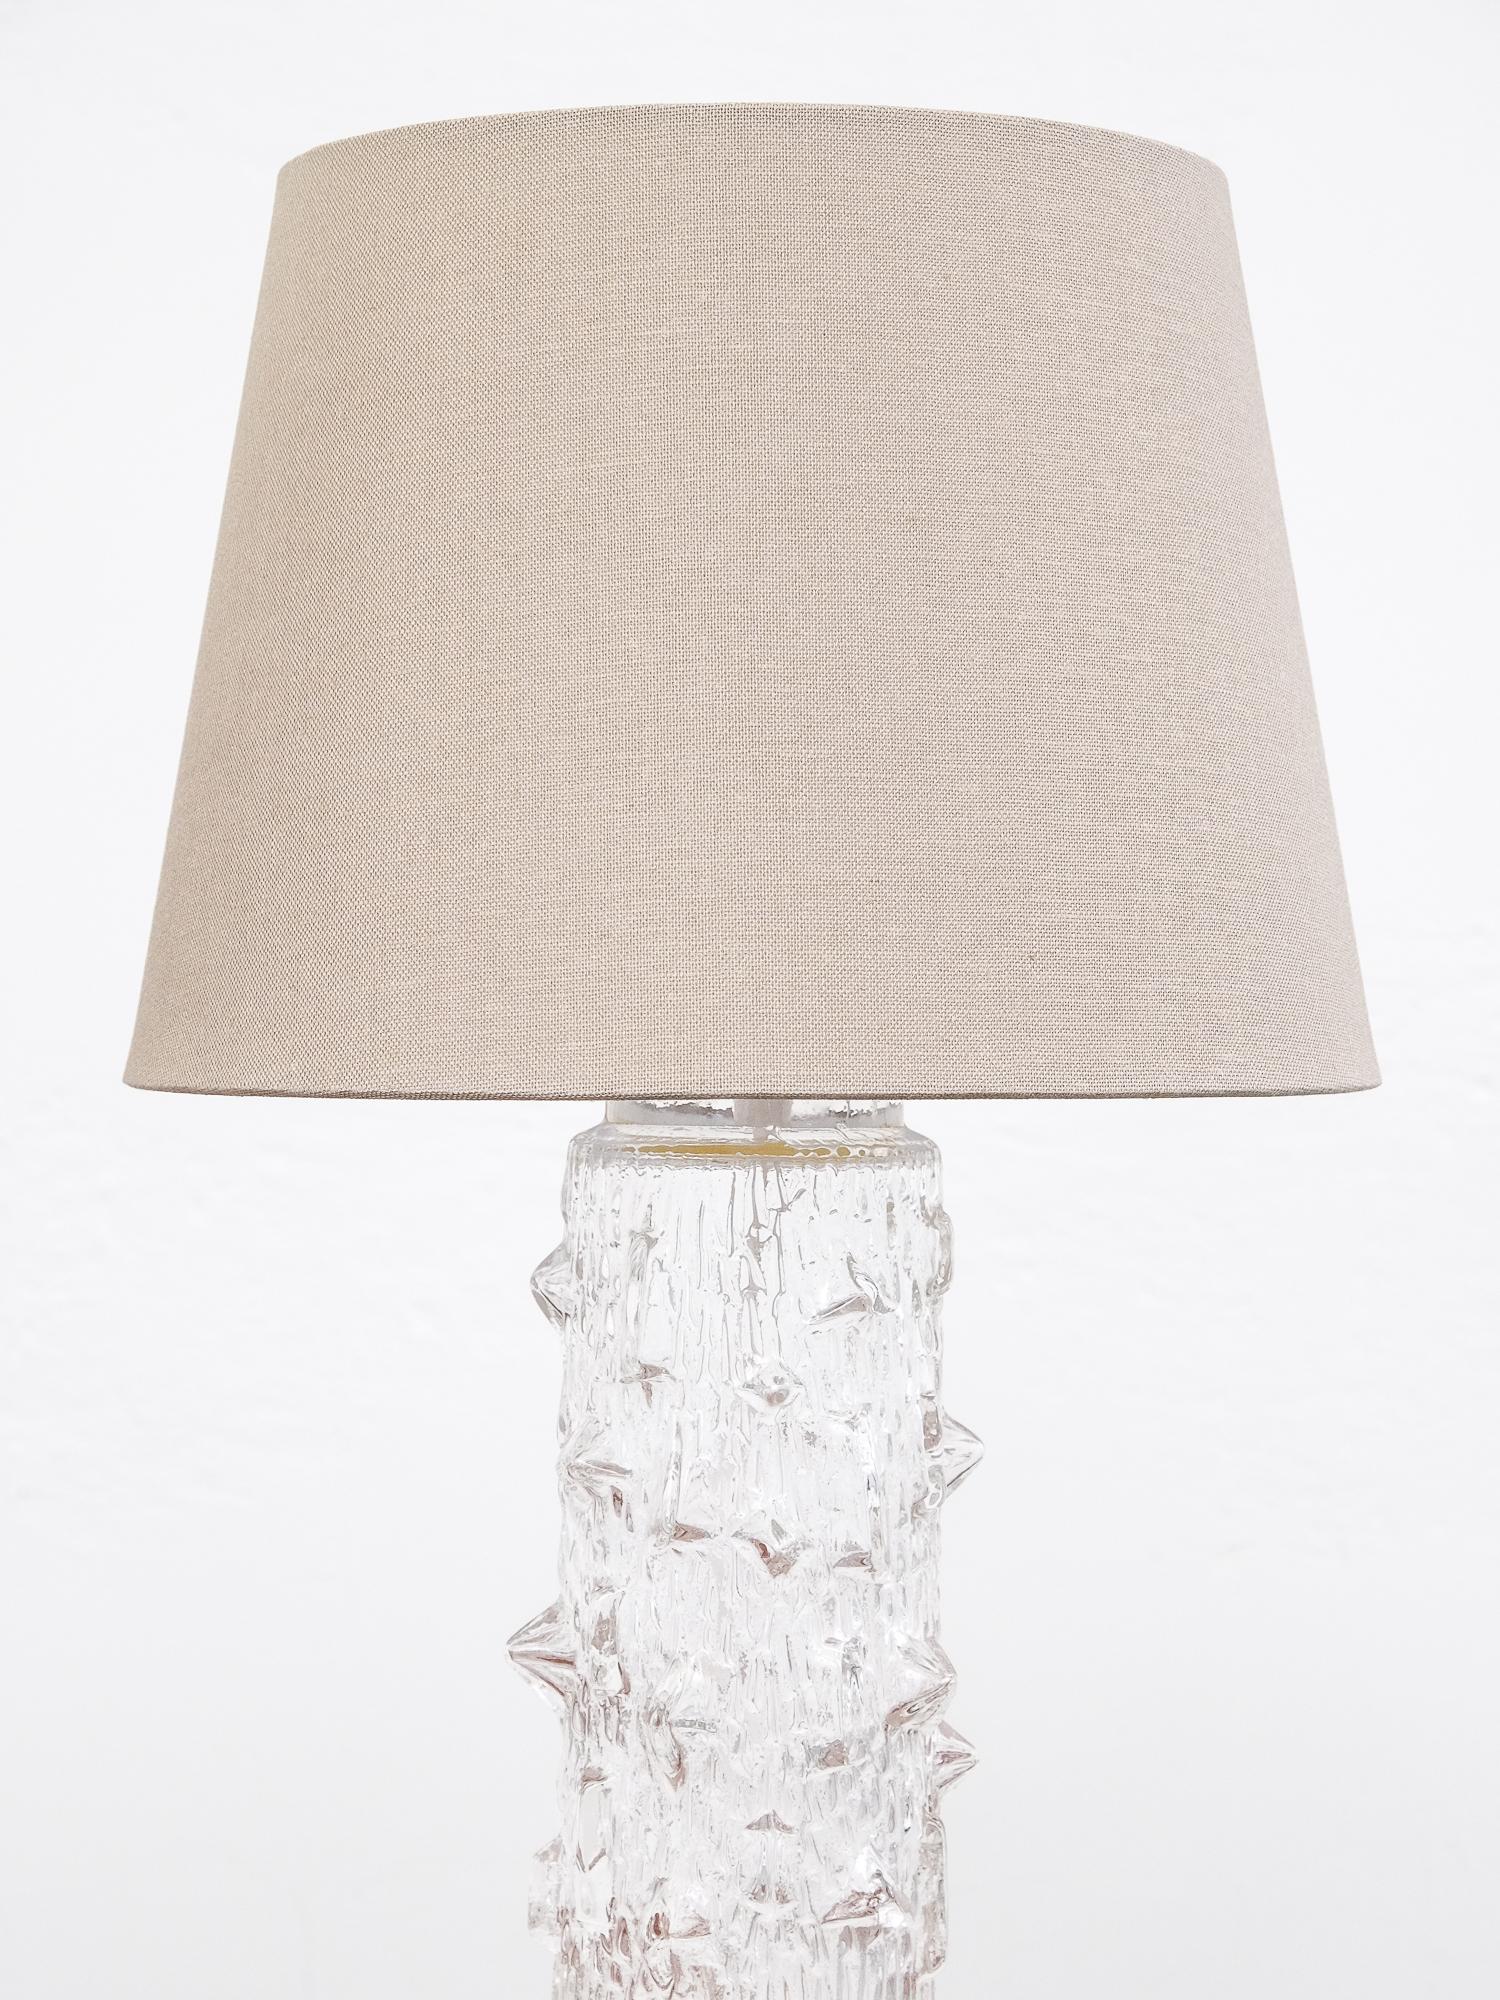 Scandinavian Modern Pair of Midcentury Scandinavian Clear Glass Table Lamps